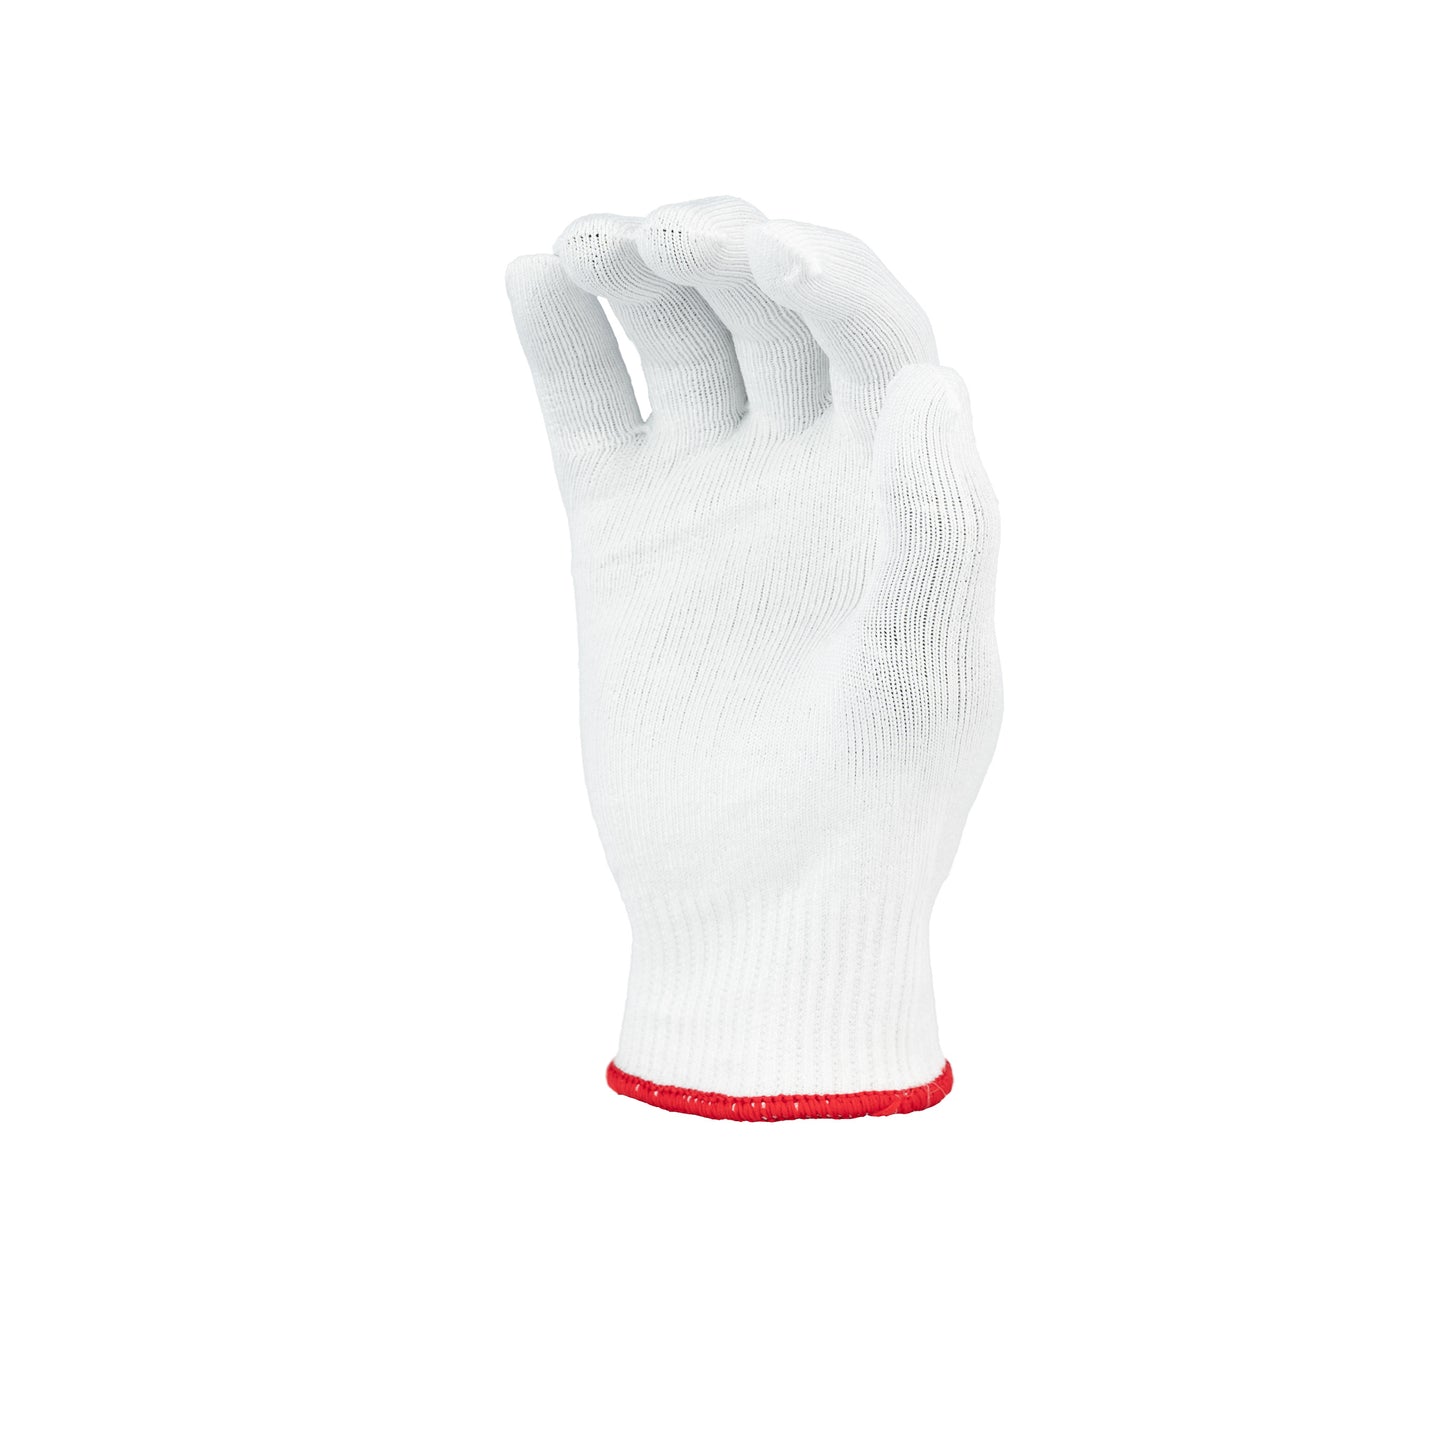 Flex-Gard™ Sterile Cut Resistant Glove Liners